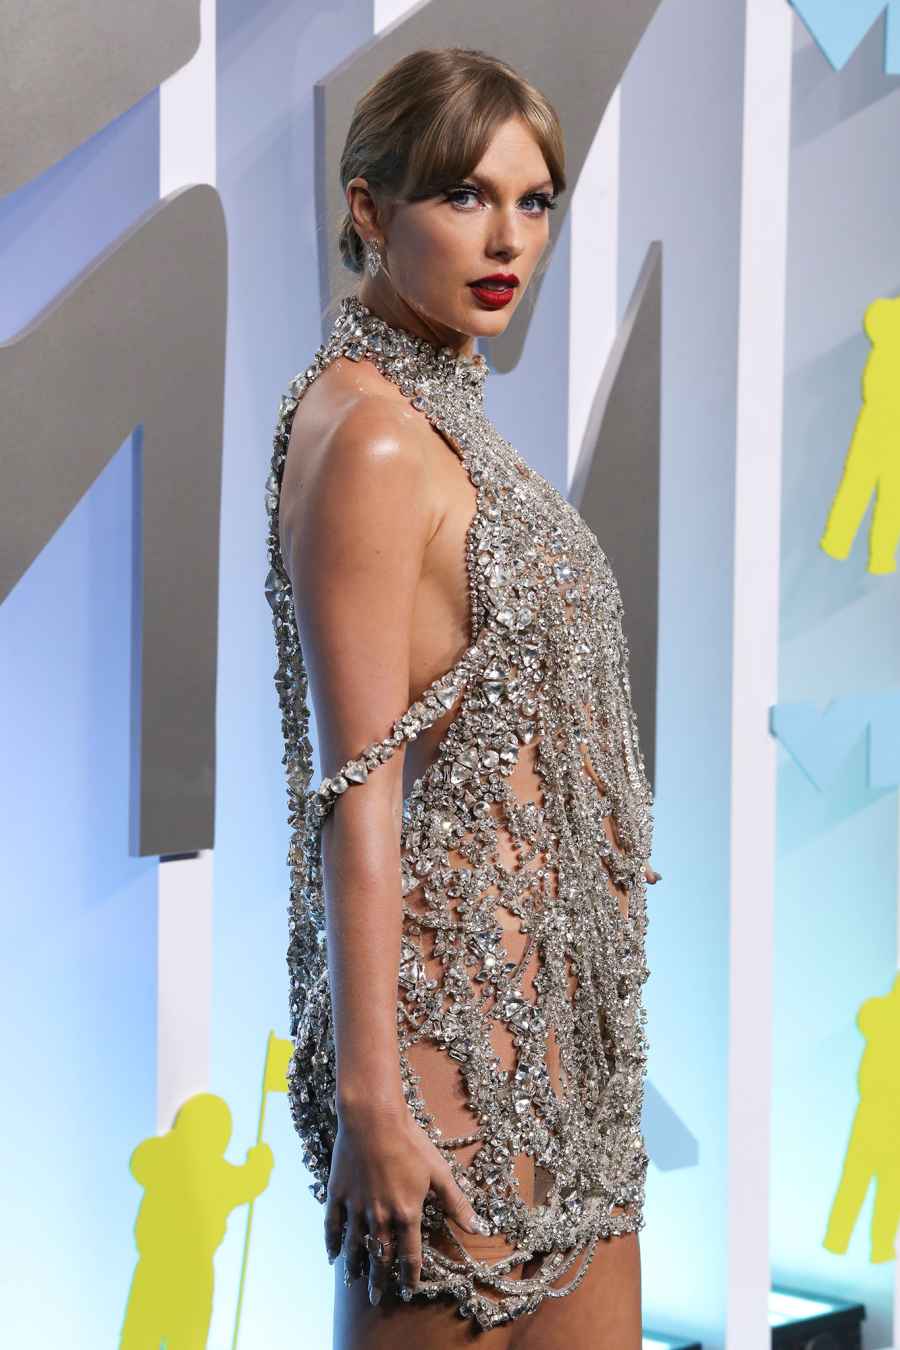 Taylor Swift Channeled Her Inner ‘Reputation’ Music Video Girl on VMAs 2022 Red Carpet